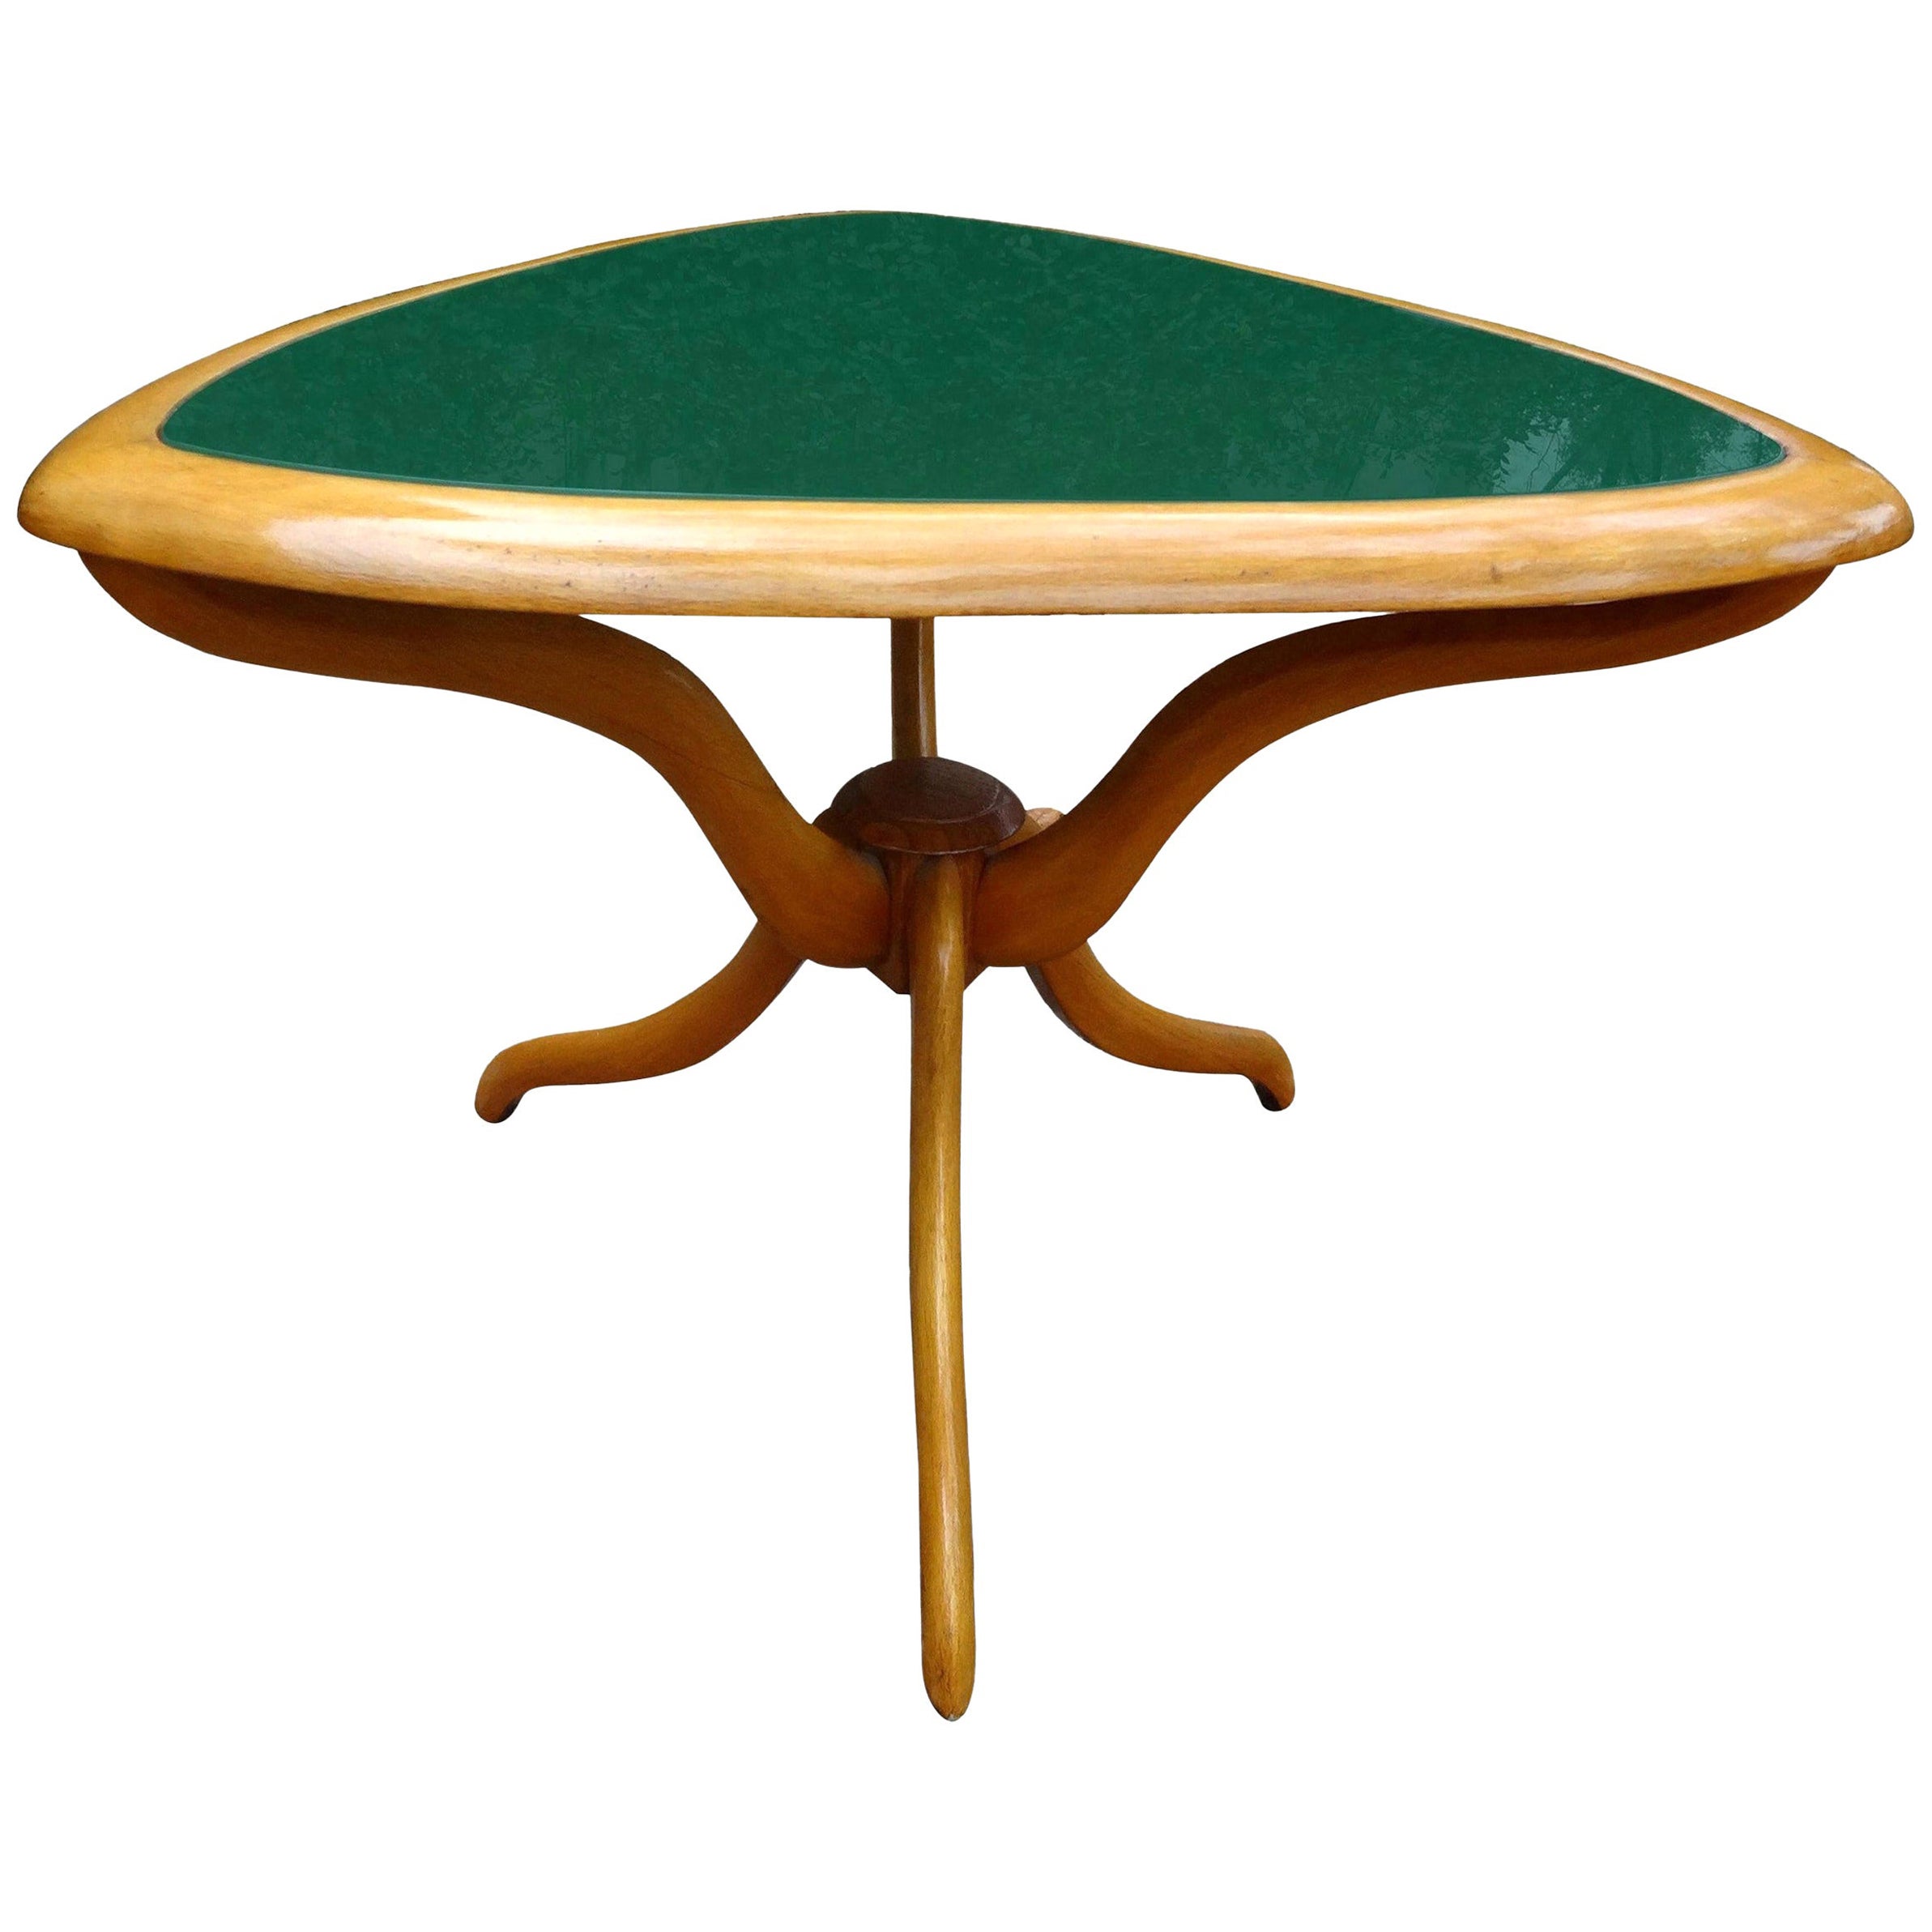 Italian Modern Gio Ponti Inspired Table For Sale